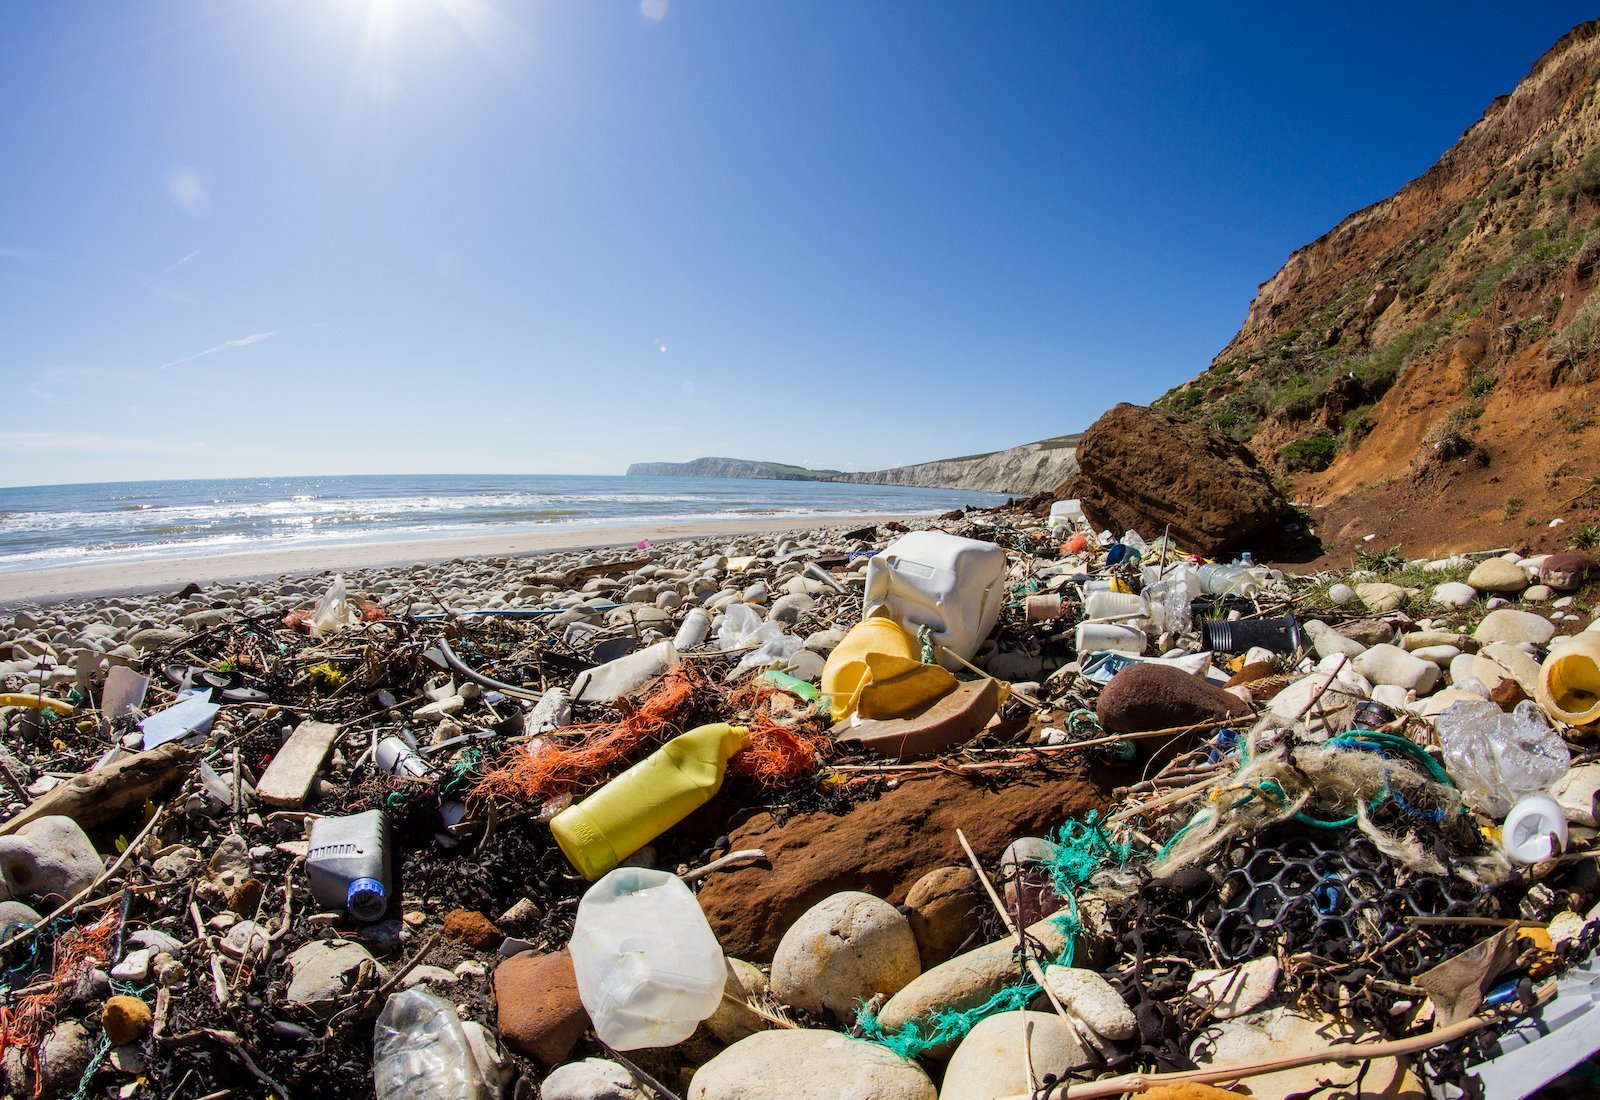 California passes nation's toughest plastic reduction bill